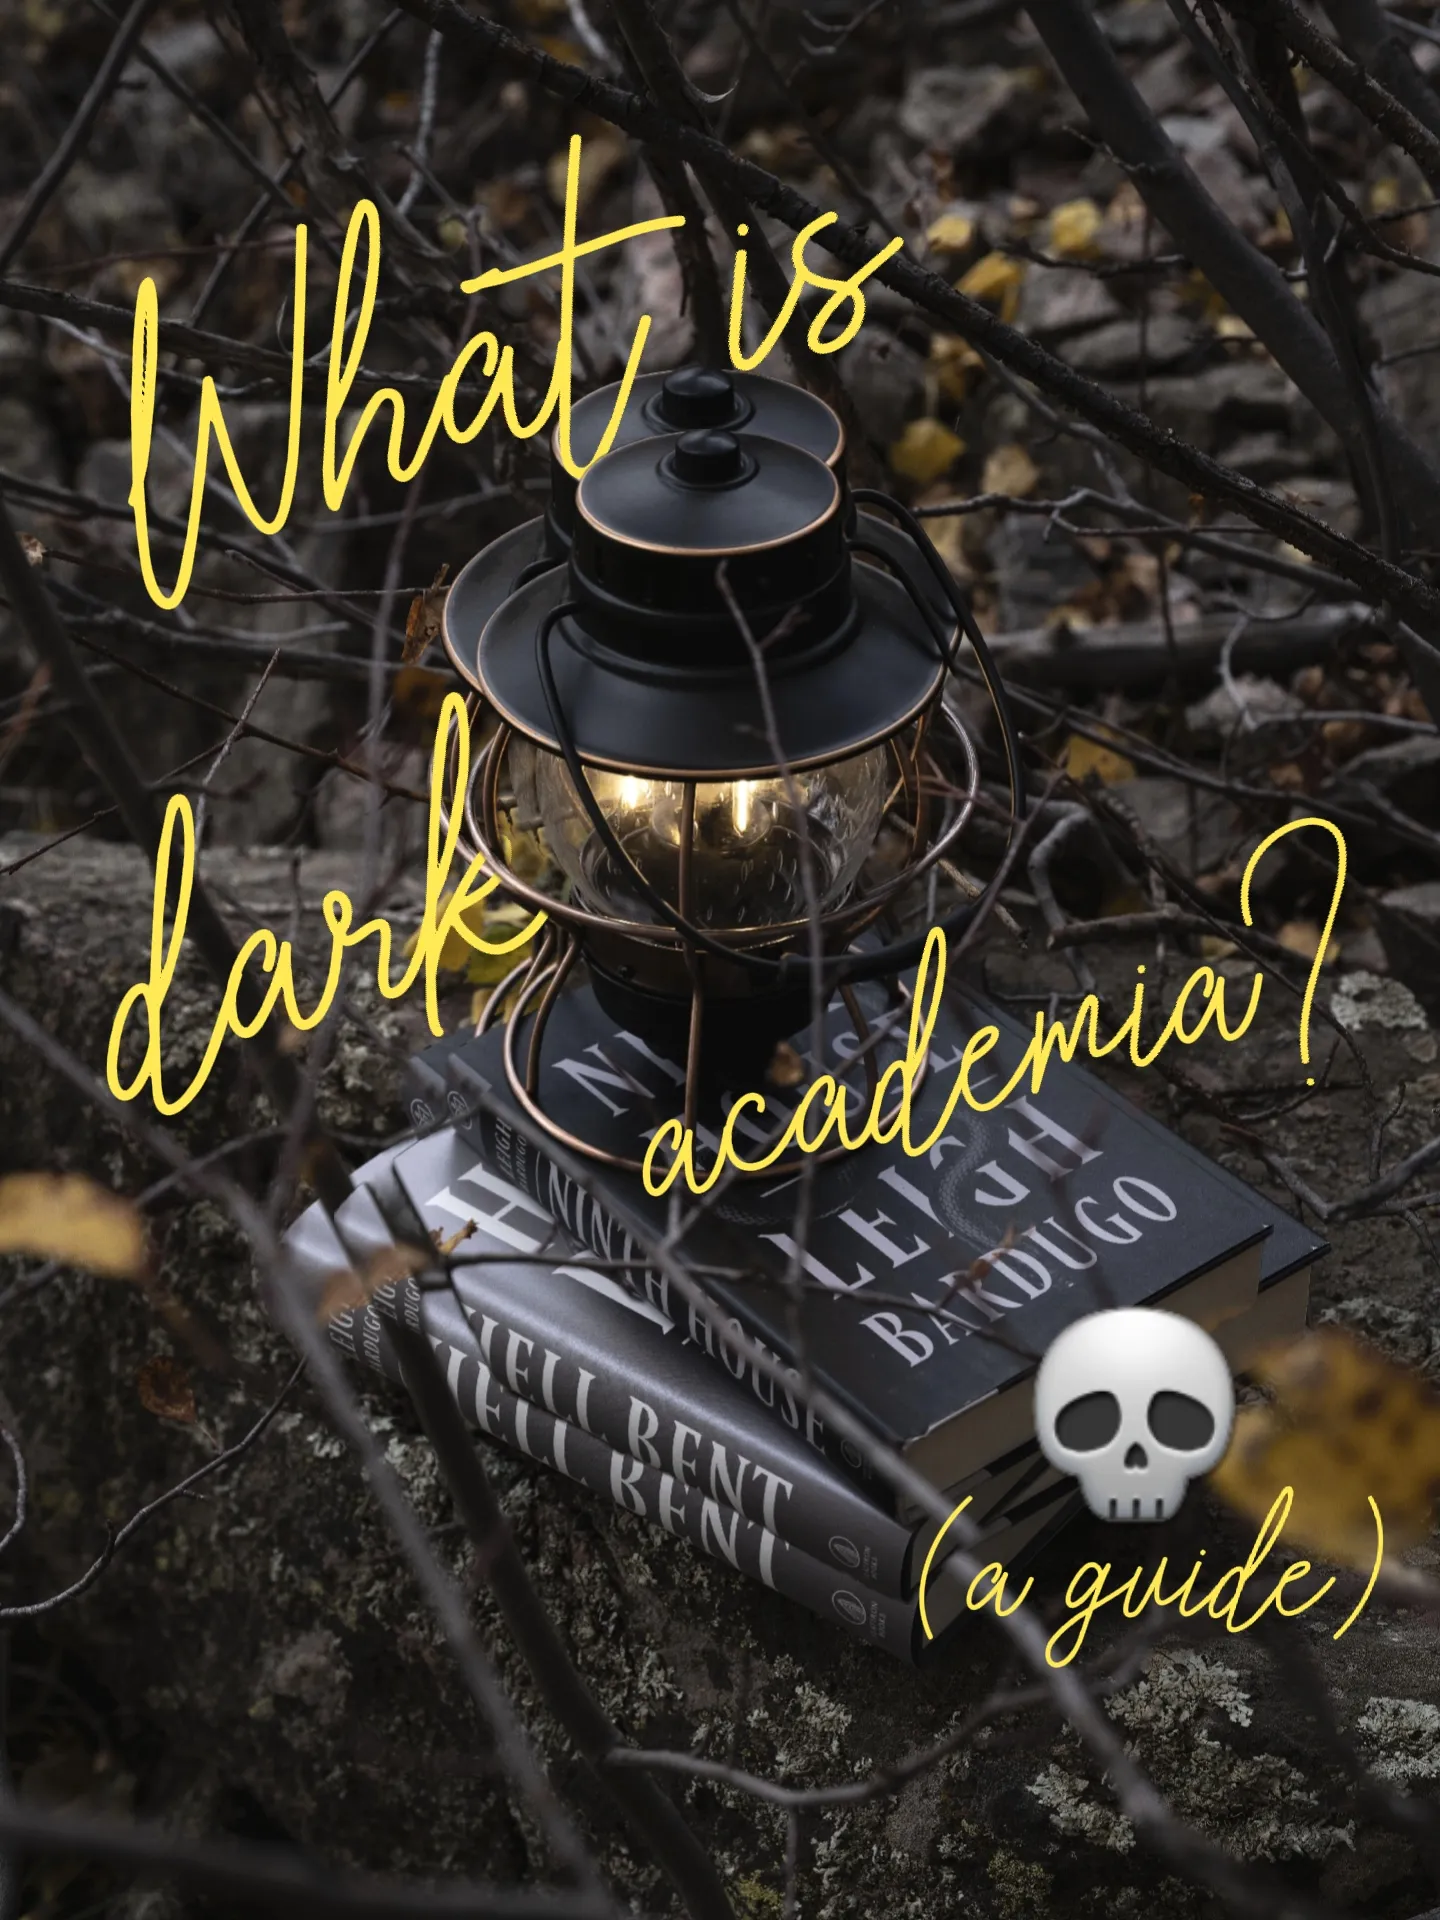 23. Dark Academia: Genre or Aesthetic?